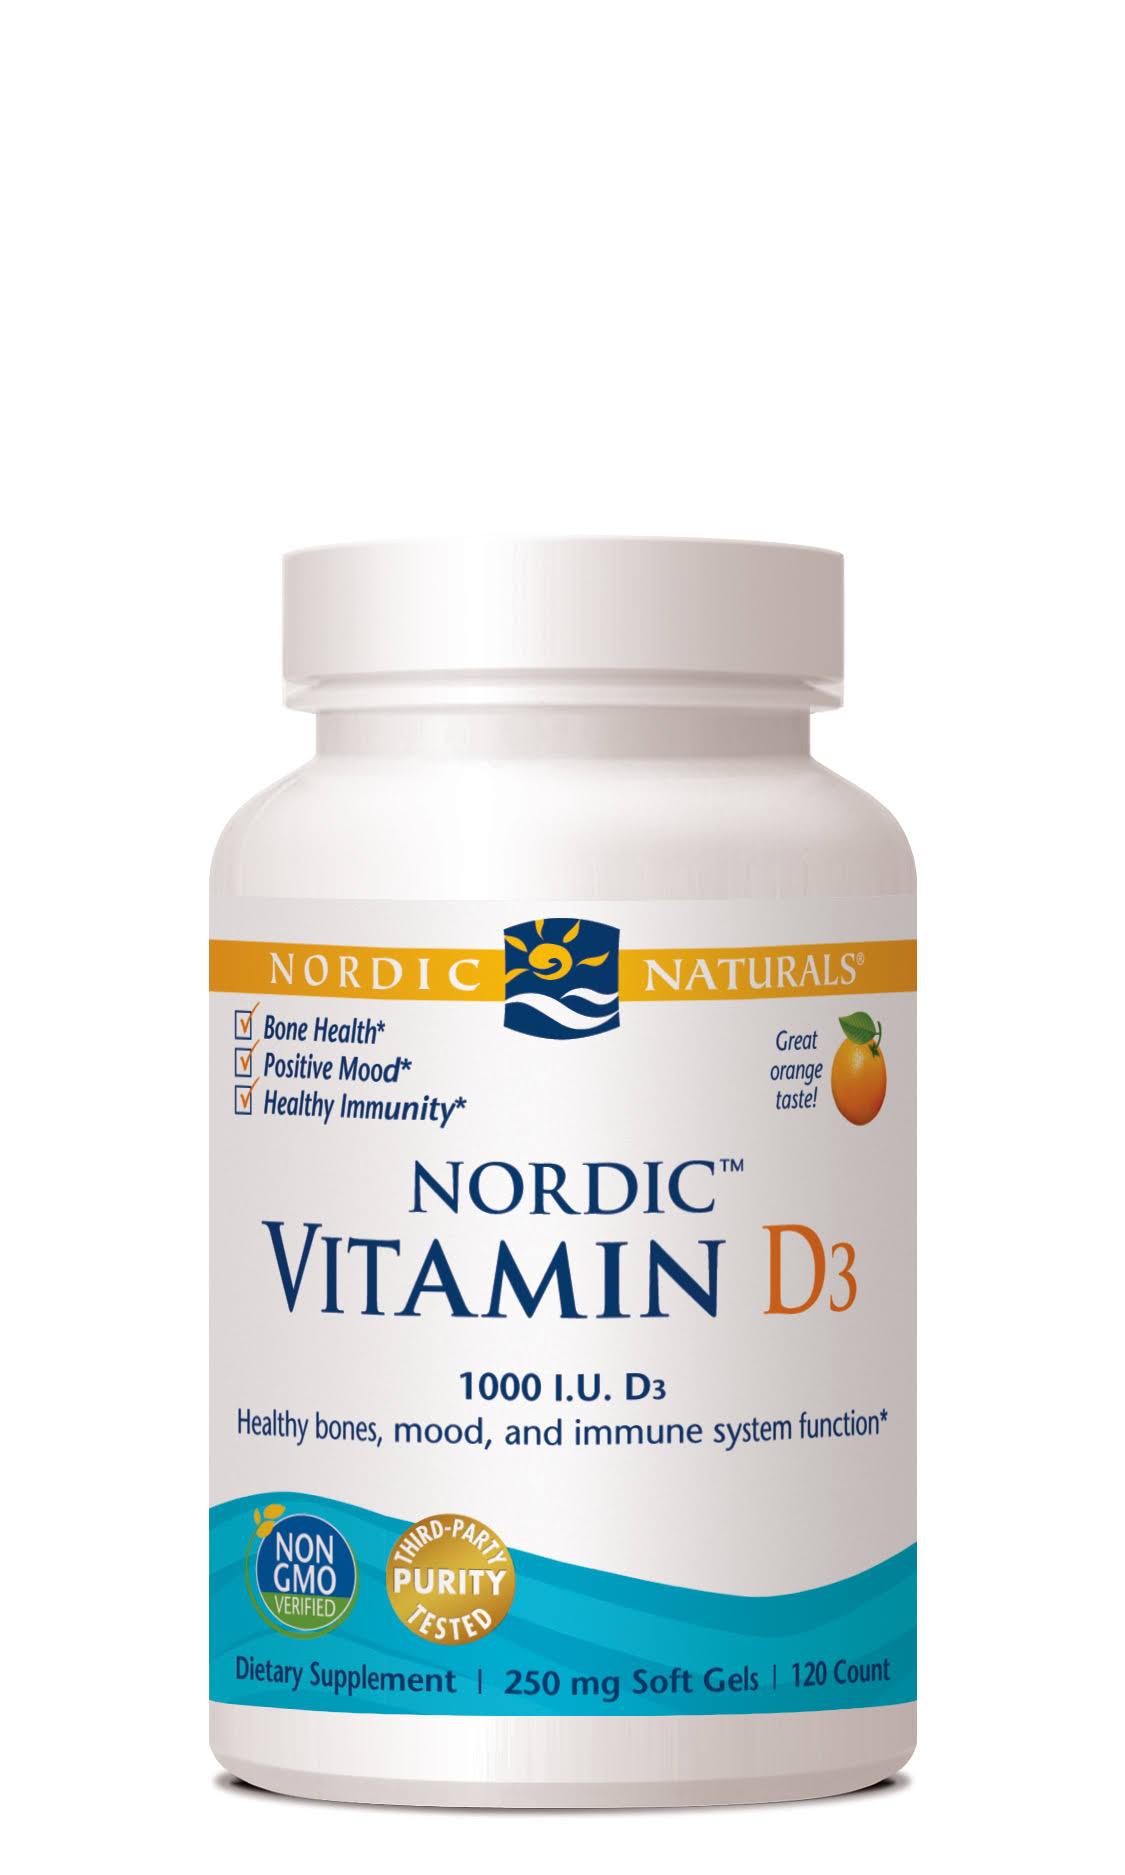 Nordic Naturals Vitamin D3 & Xtra Virgin Olive Oil Dietary Supplement - Orange, 120 Soft Gels